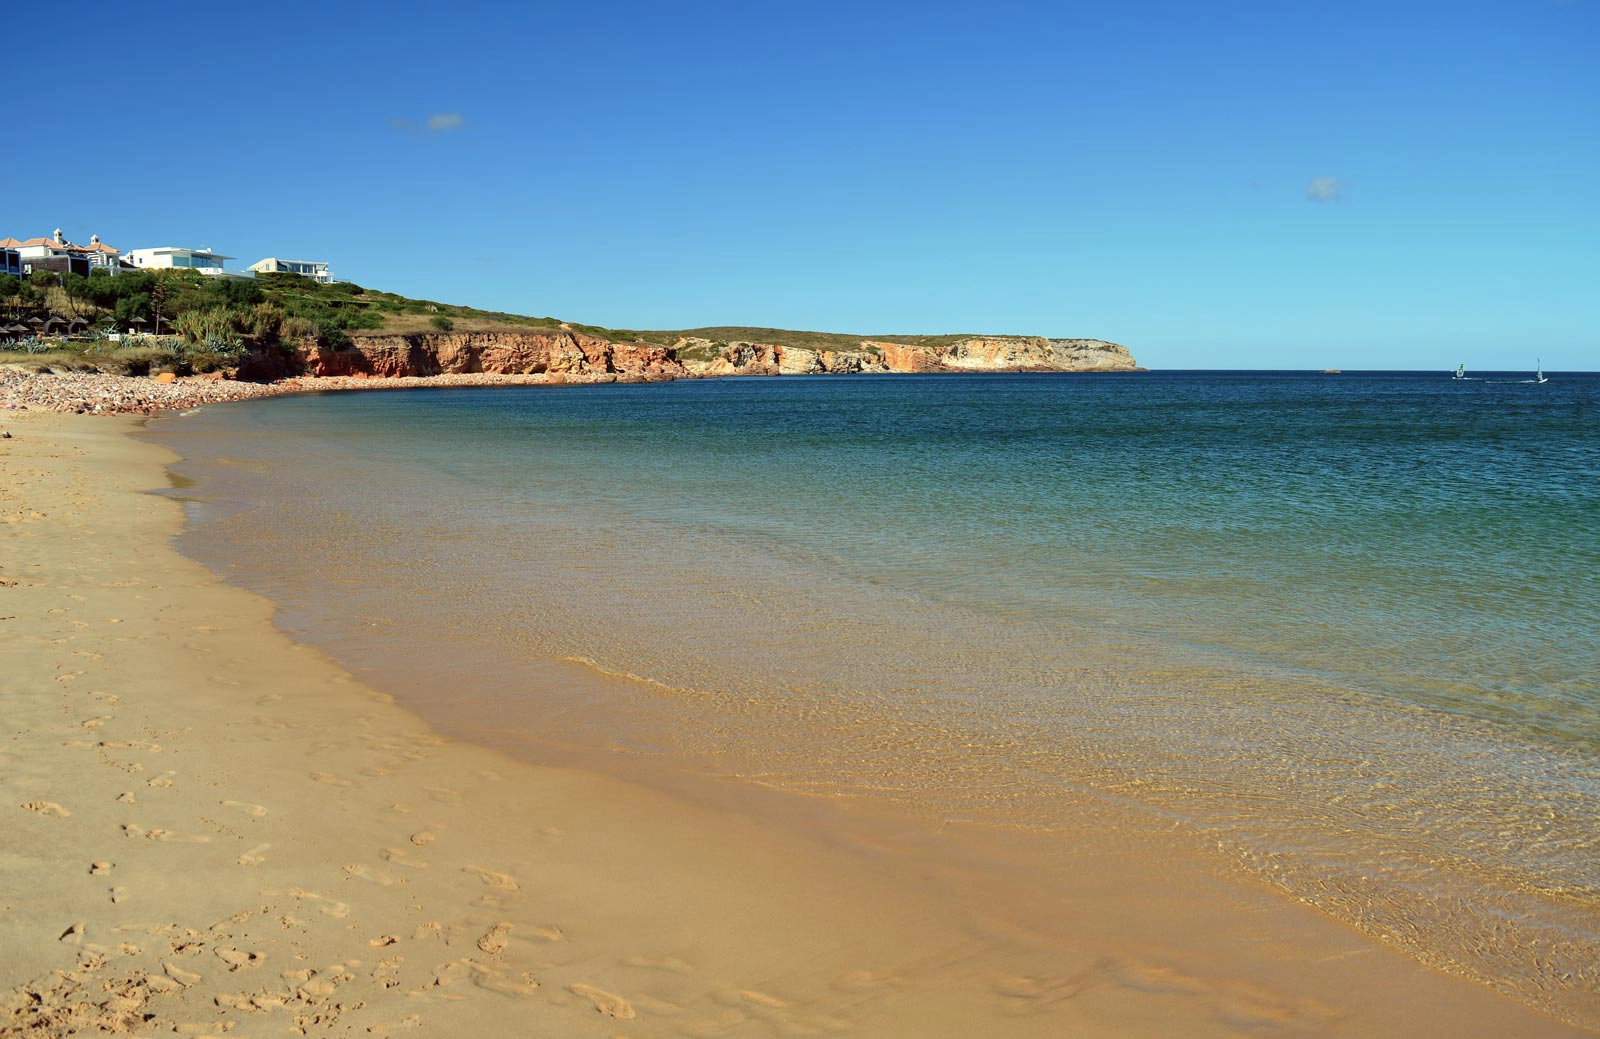  Martinhal  strand - Algarve